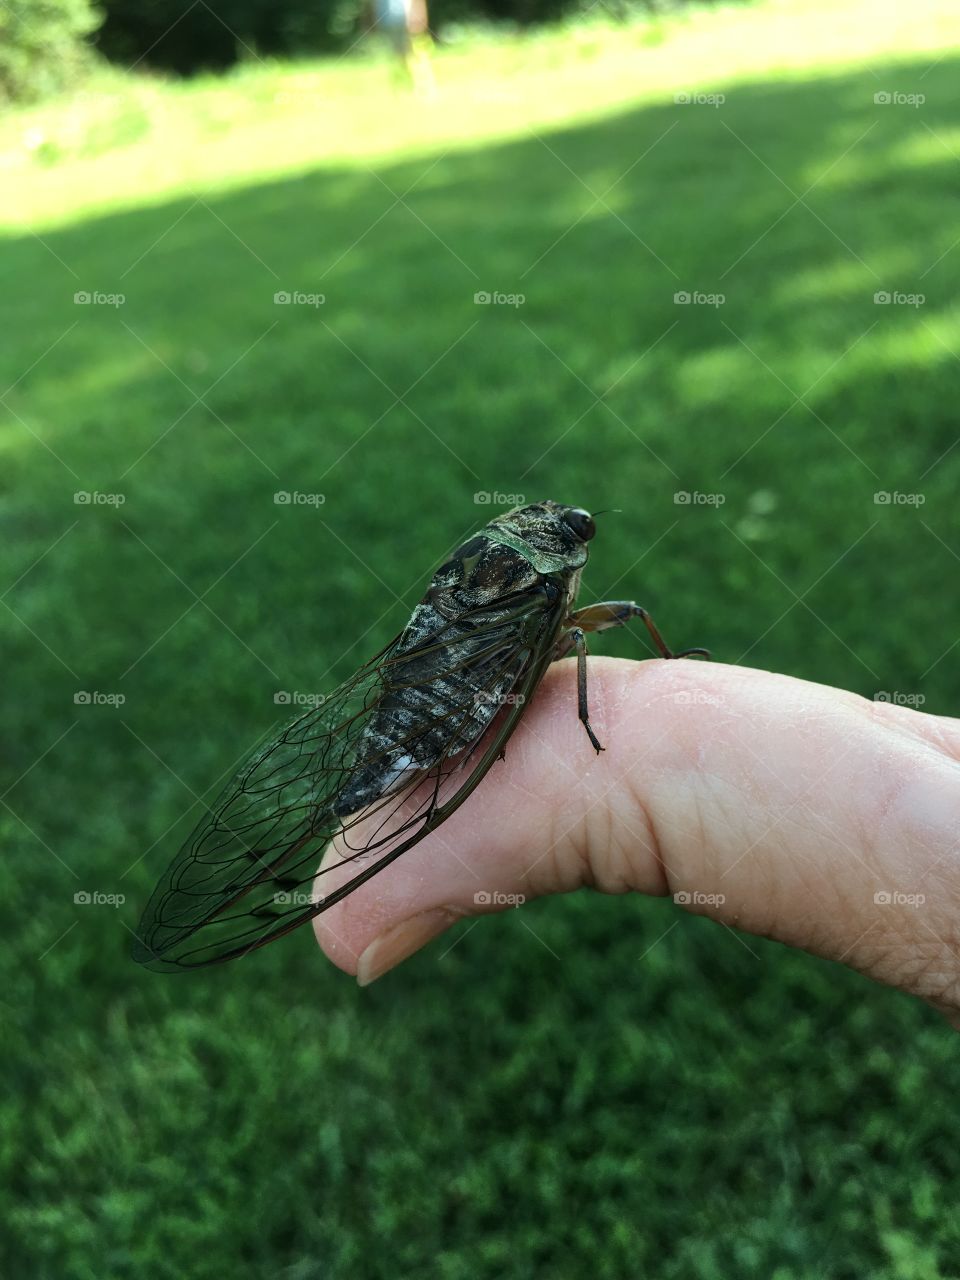 Braving the Cicadas